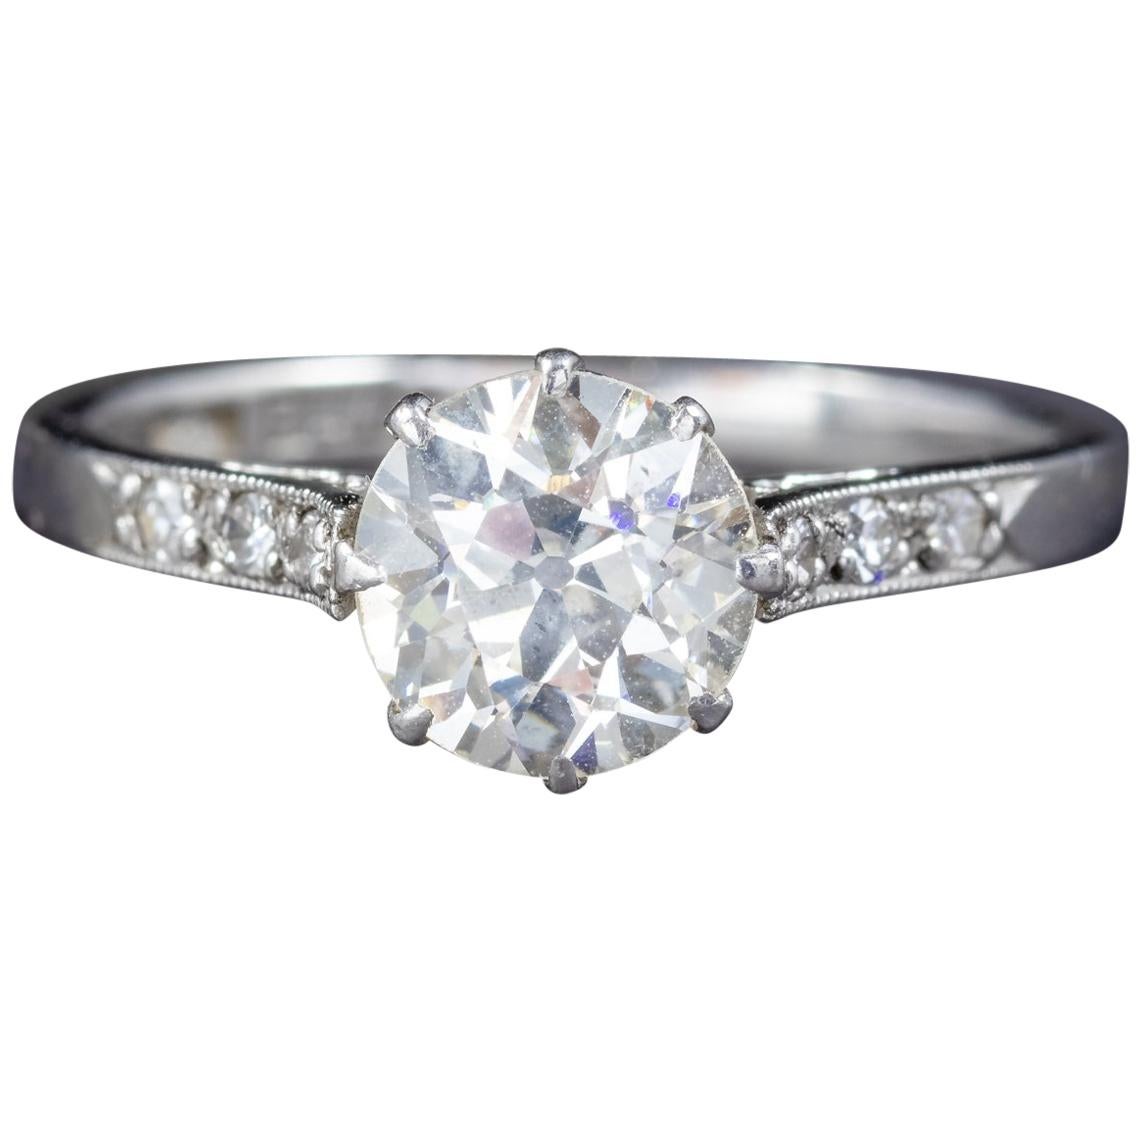 Antique Edwardian Diamond Solitaire Ring Platinum Engagement Ring, circa 1910